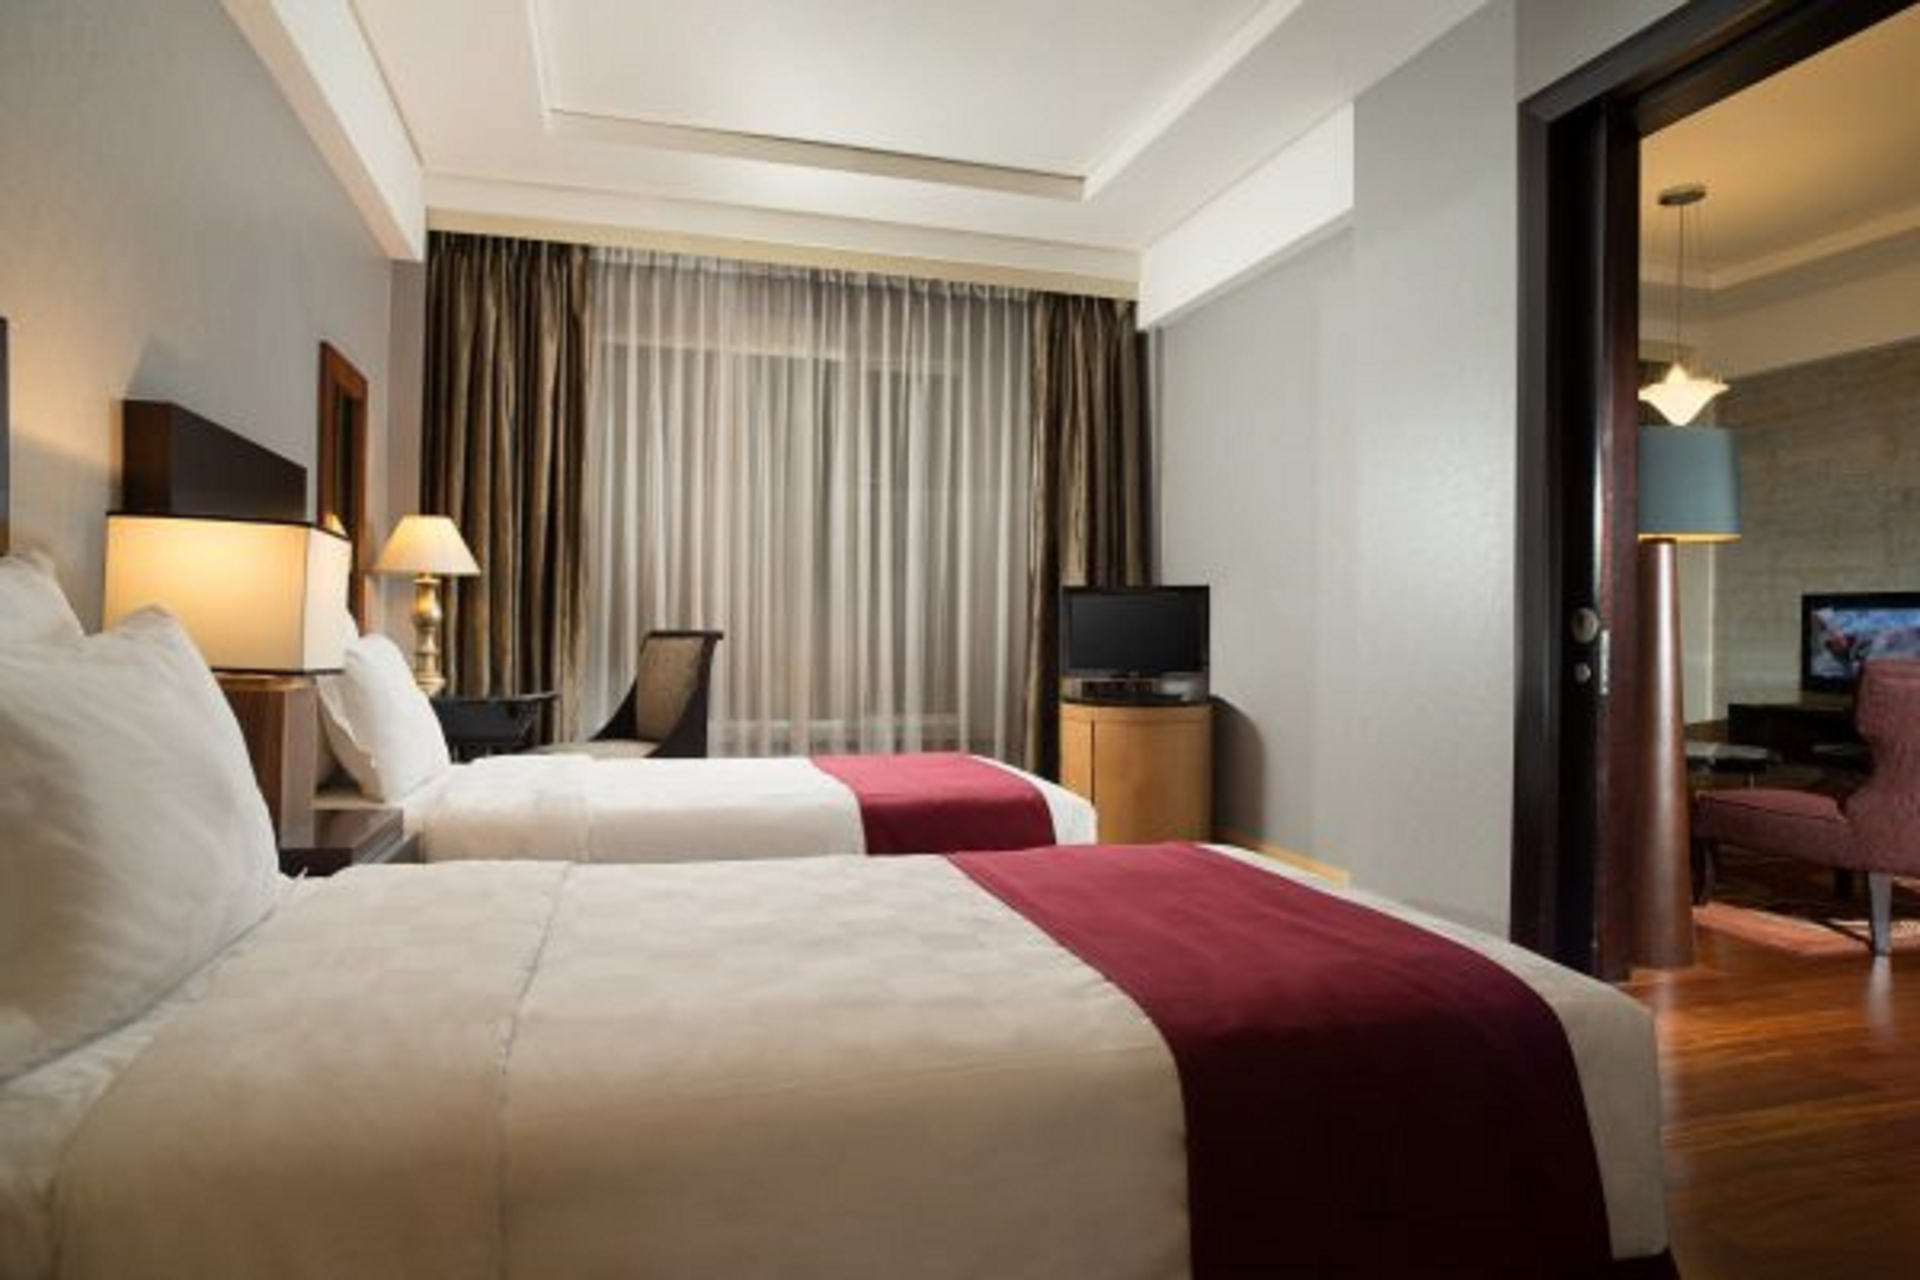 Bedroom 3, Grandkemang Hotel, Jakarta Selatan